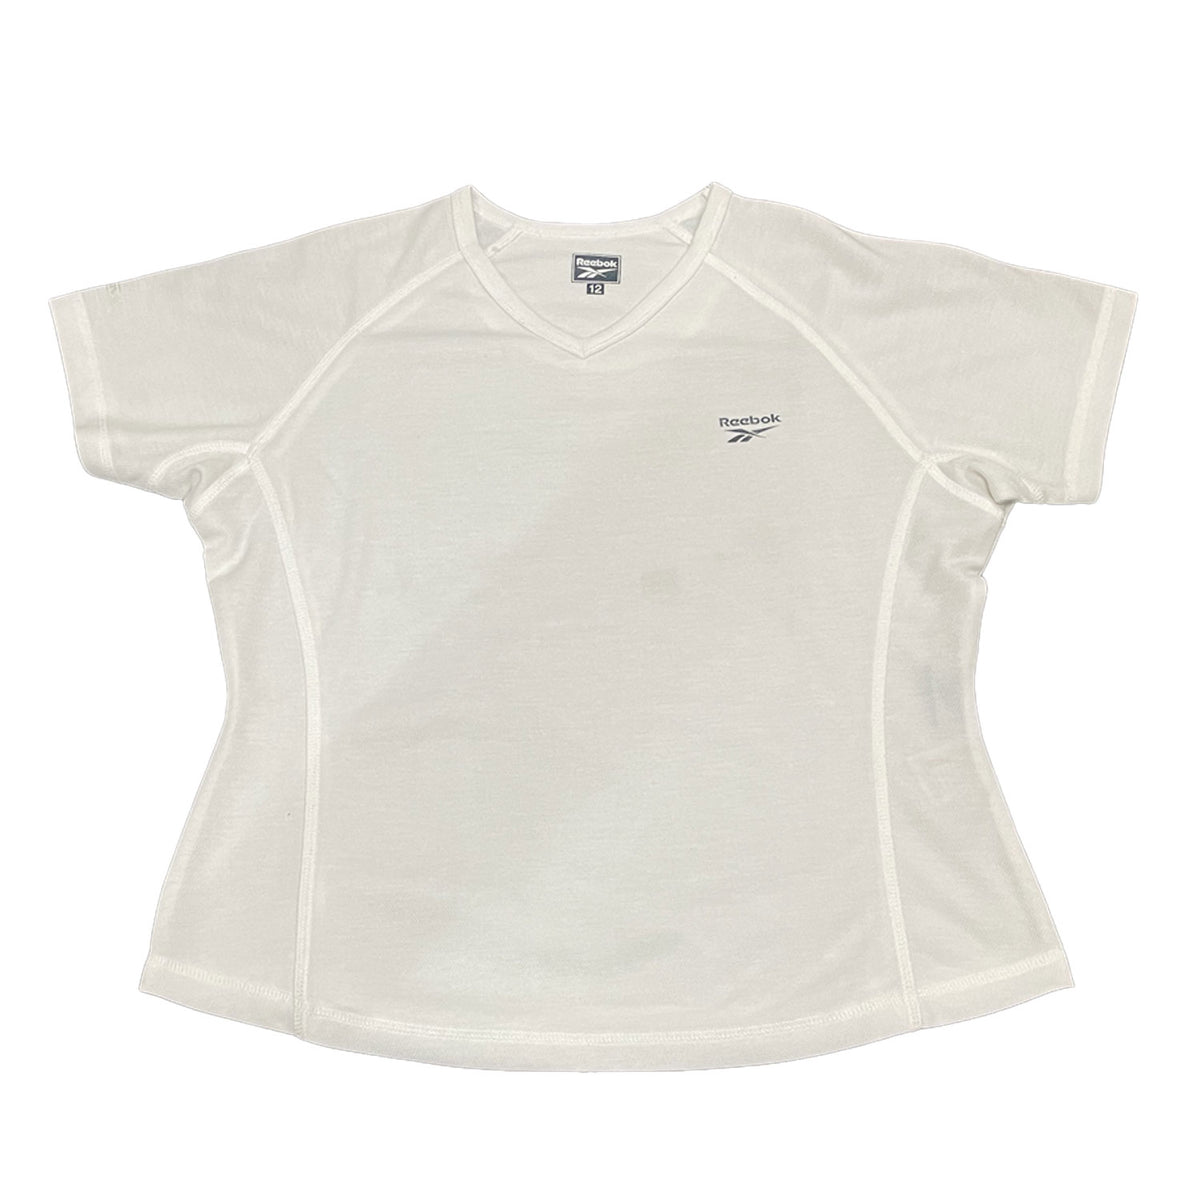 Reebok Womens Athletics Department T-Shirt - White - UK Size 12